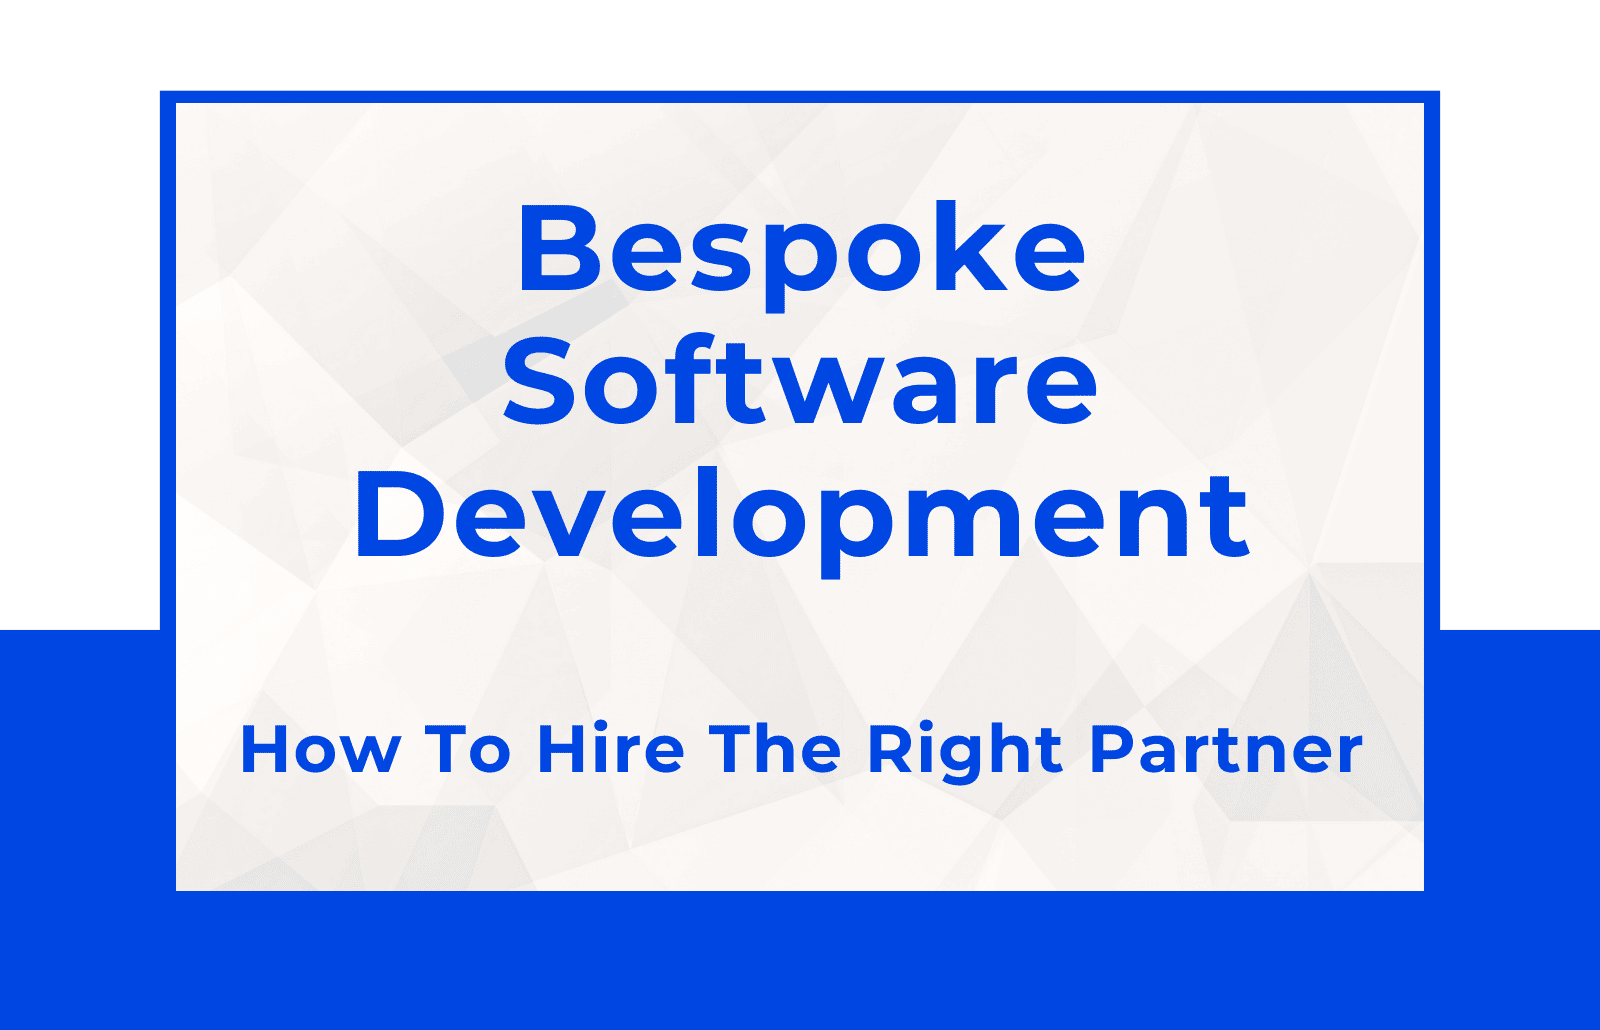 bespoke software development by Zartis